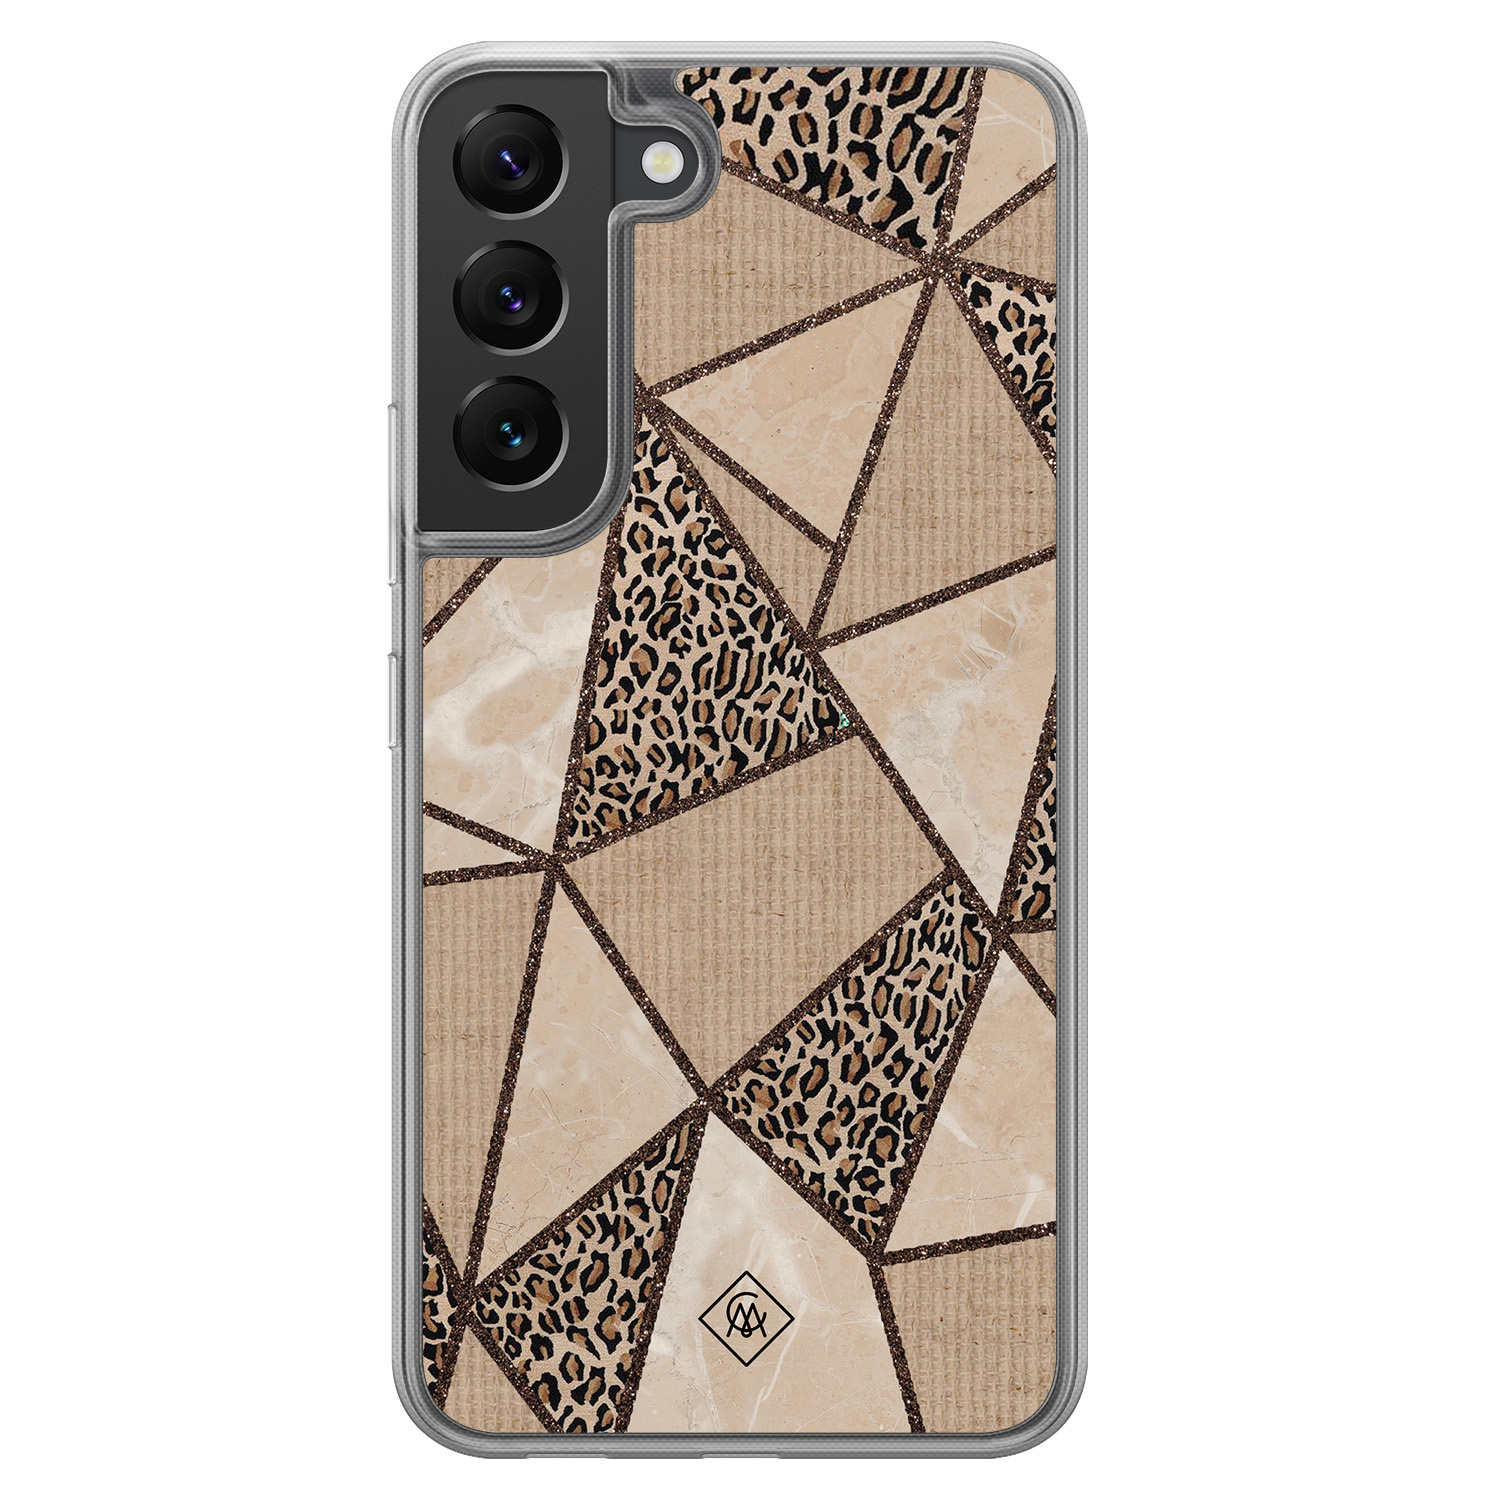 Samsung Galaxy S22 hoesje siliconen - Leopard abstract - Casimoda® 2-in-1 case hybride - Schokbestendig - Luipaardprint - Verhoogde randen - Bruin/beige, Transparant